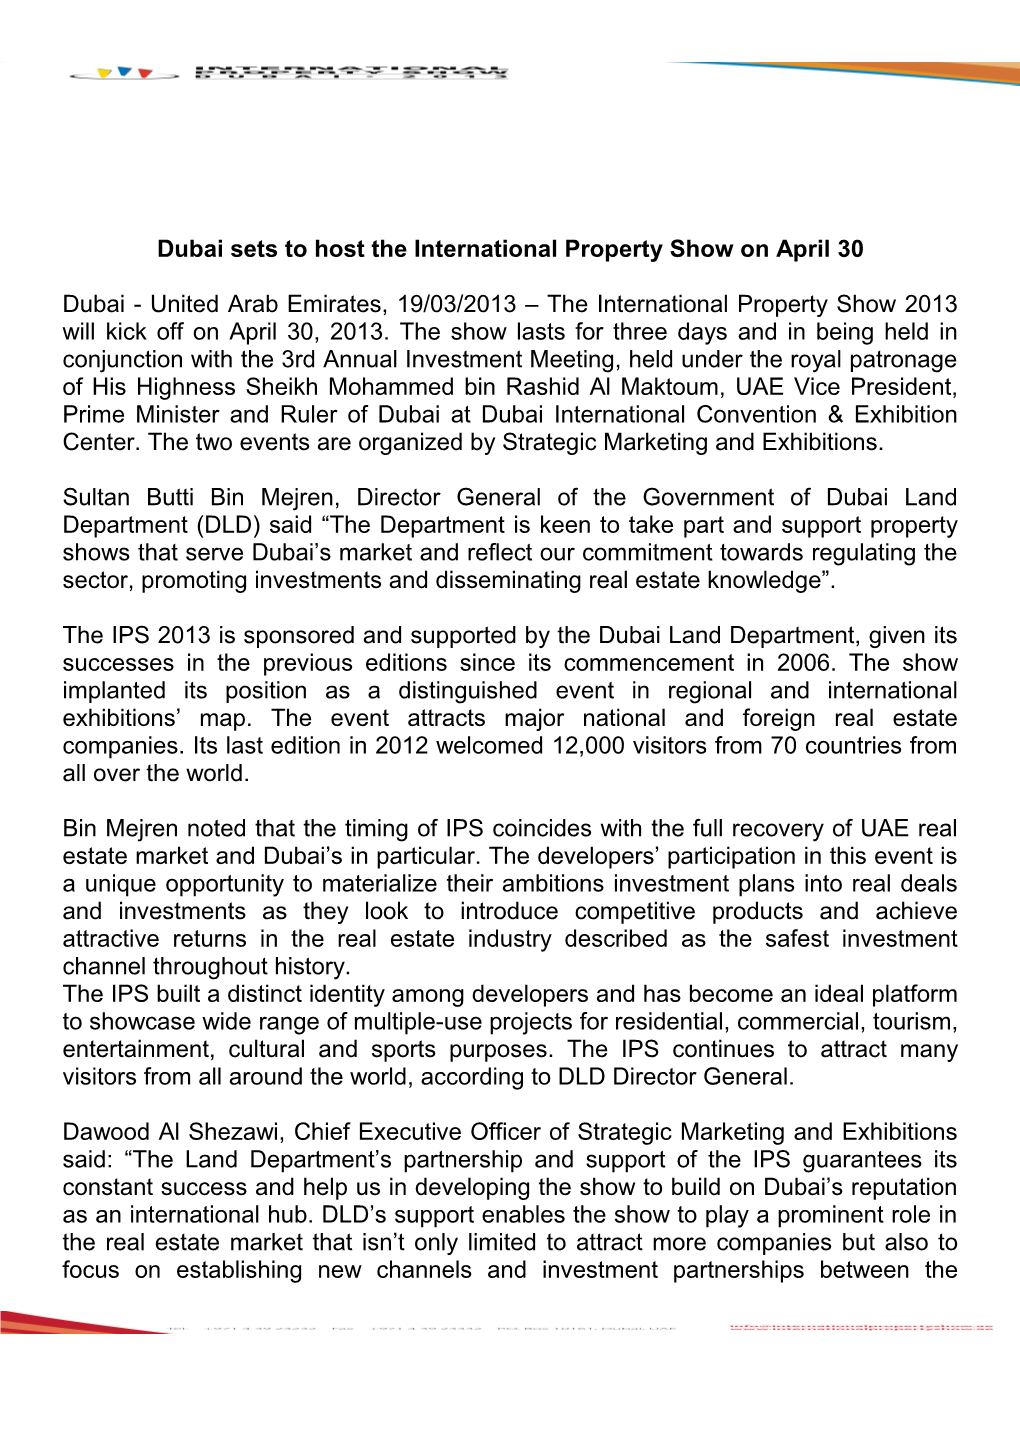 Dubai Sets to Host the International Property Show on April 30